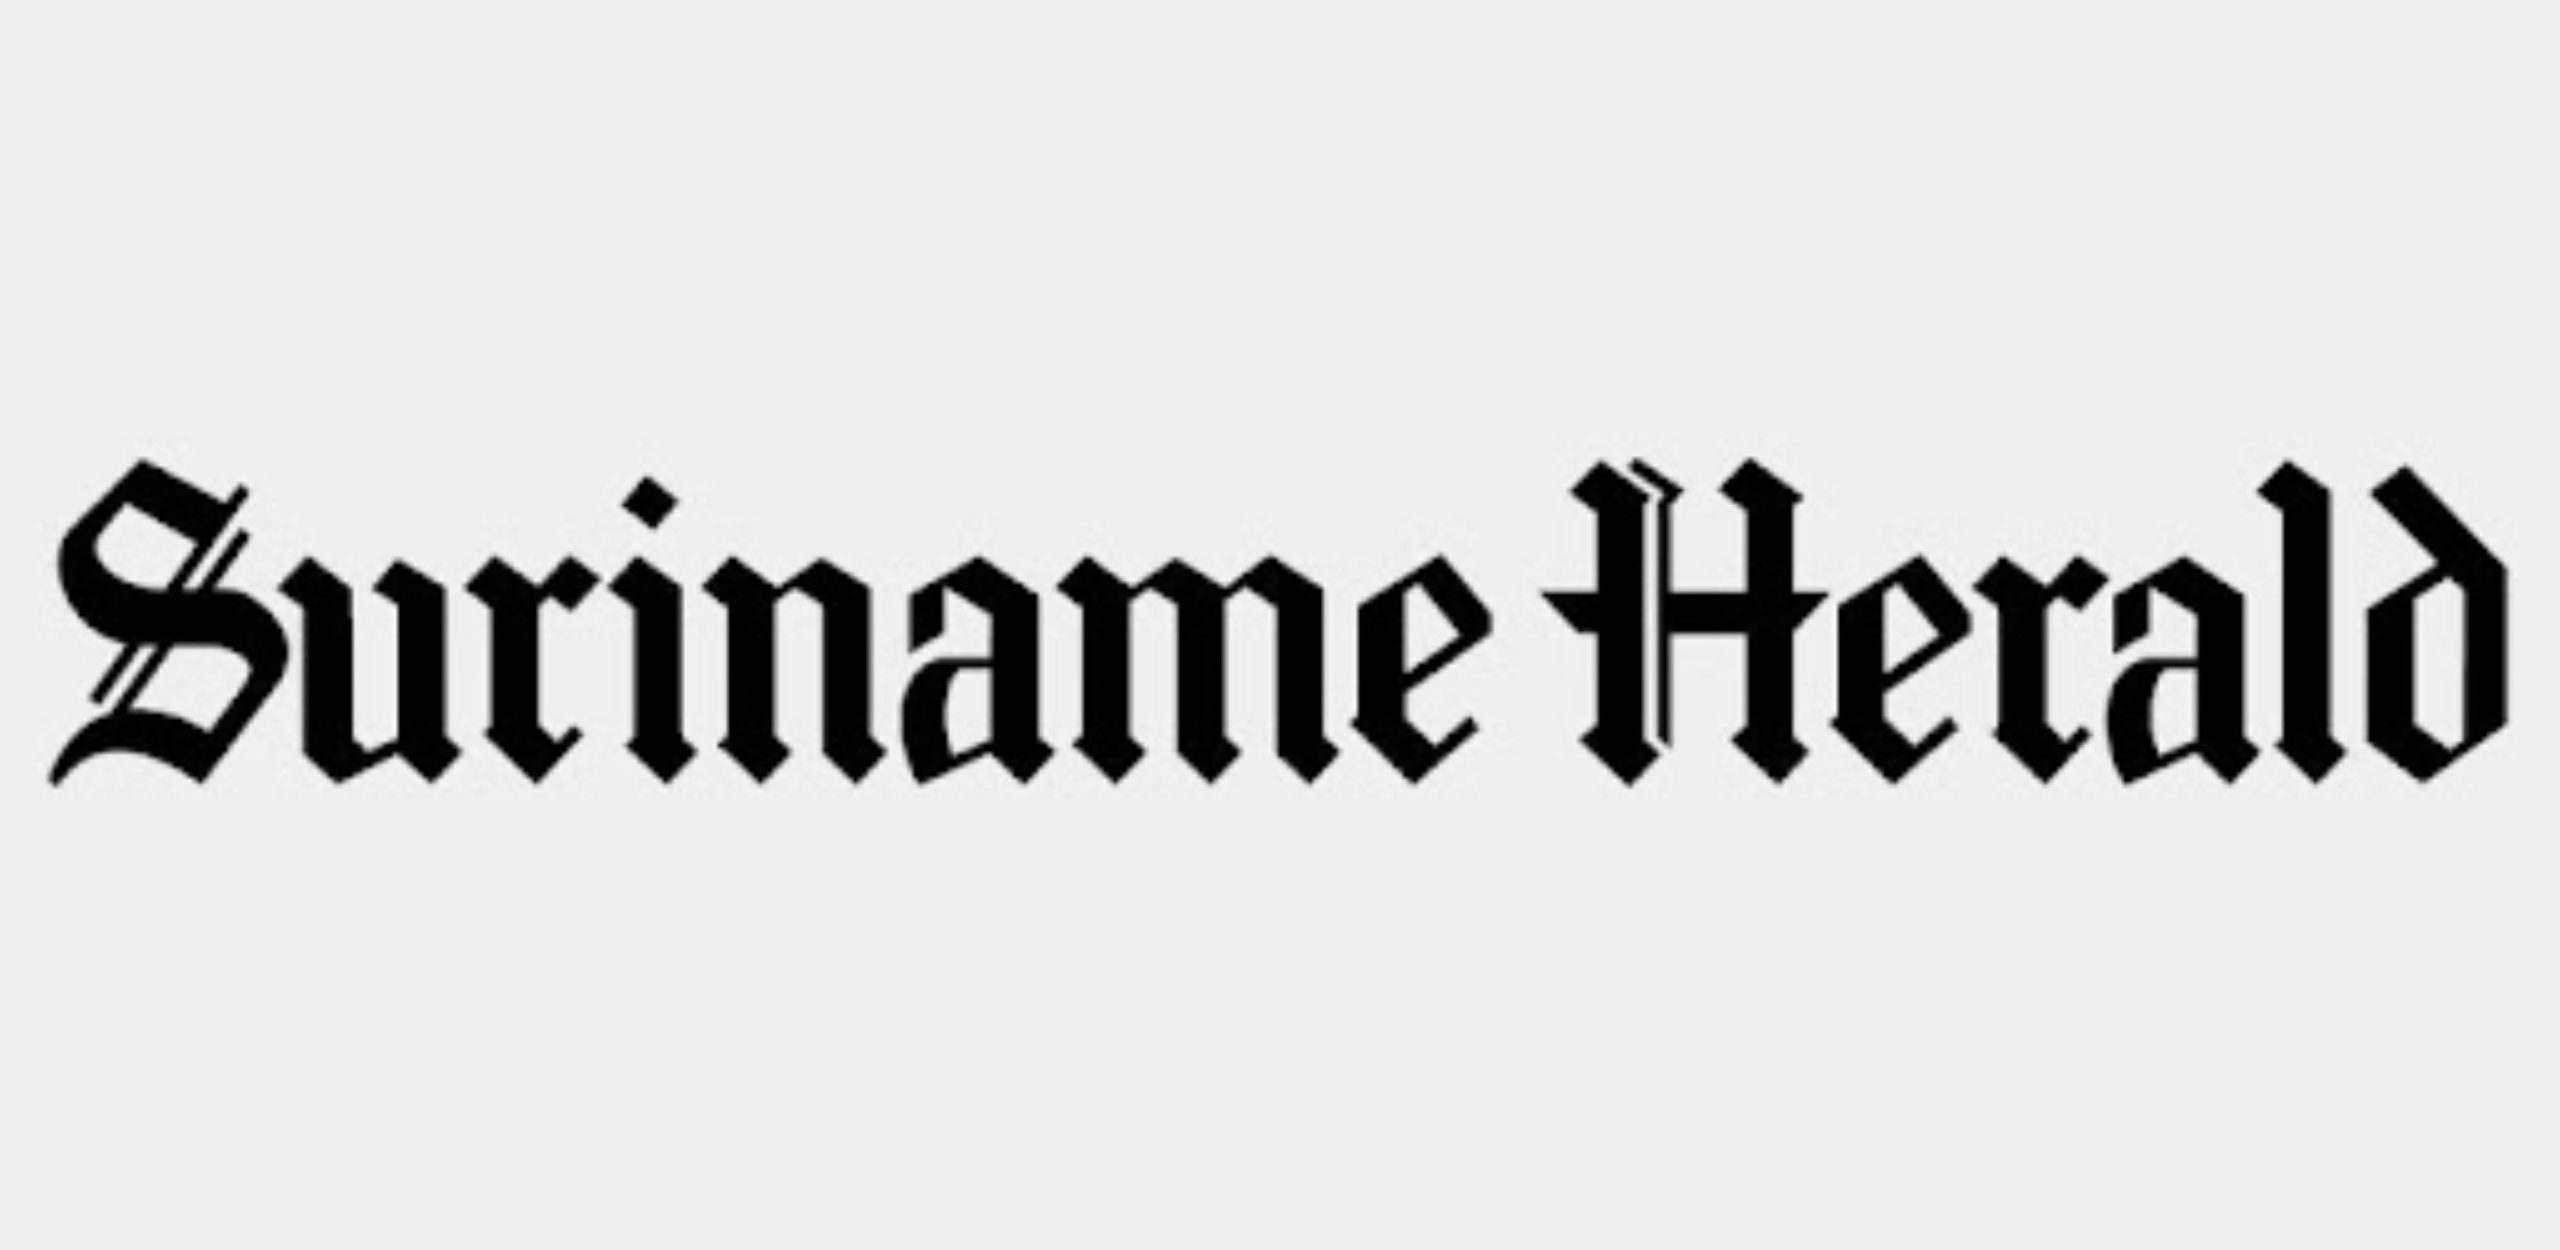 Suriname Herald scaled